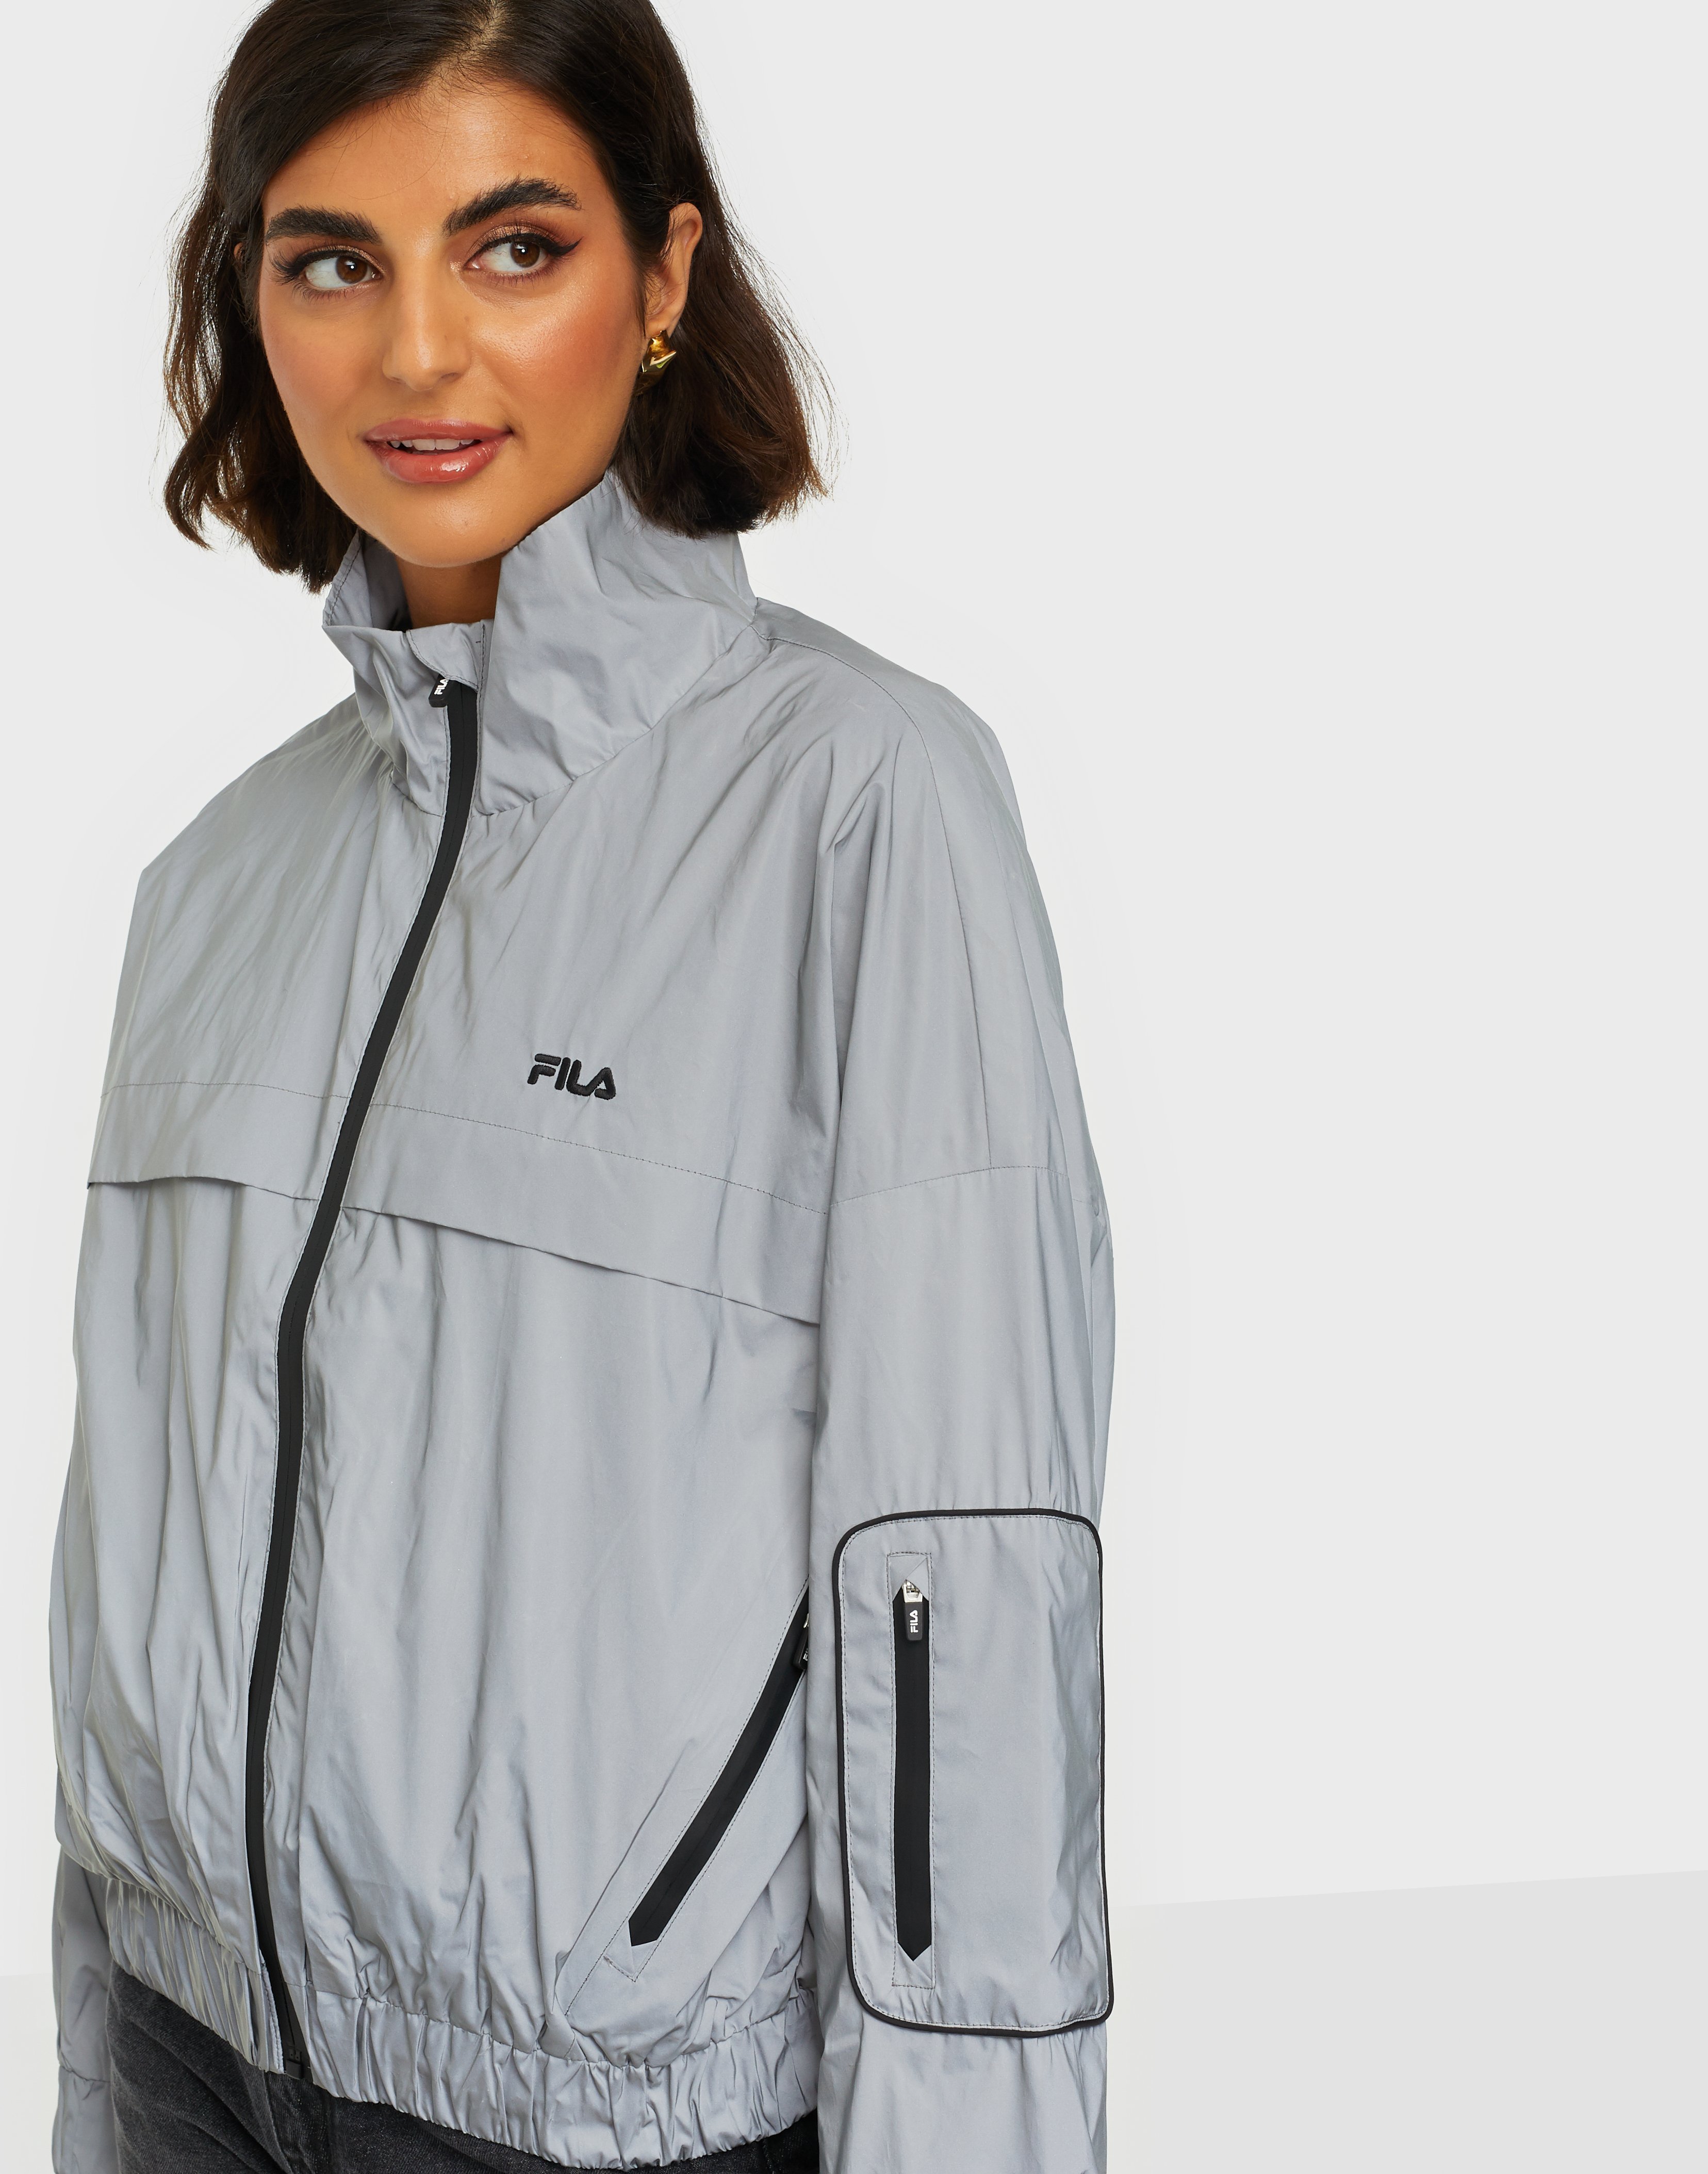 fila reflective jacket